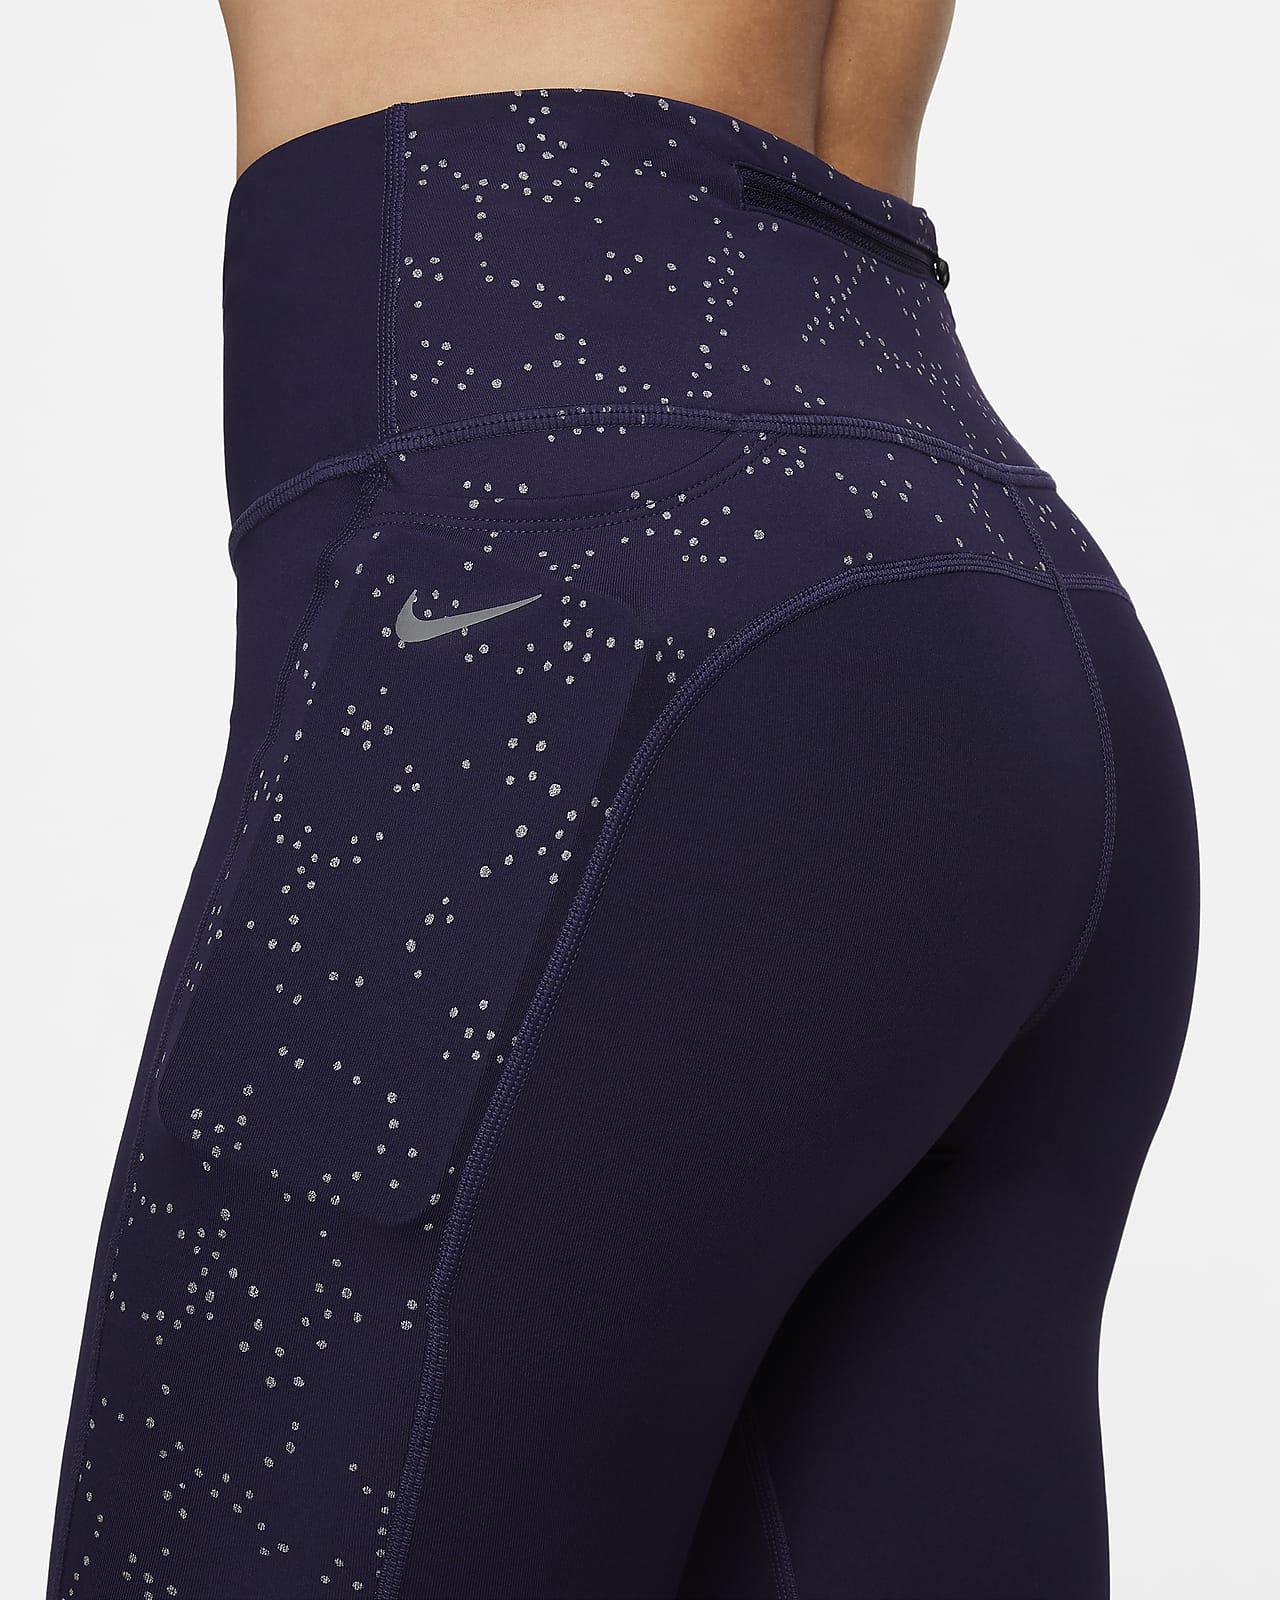 Nike Speed 7/8 Women's Running Leggings are part of the Glam Dunk